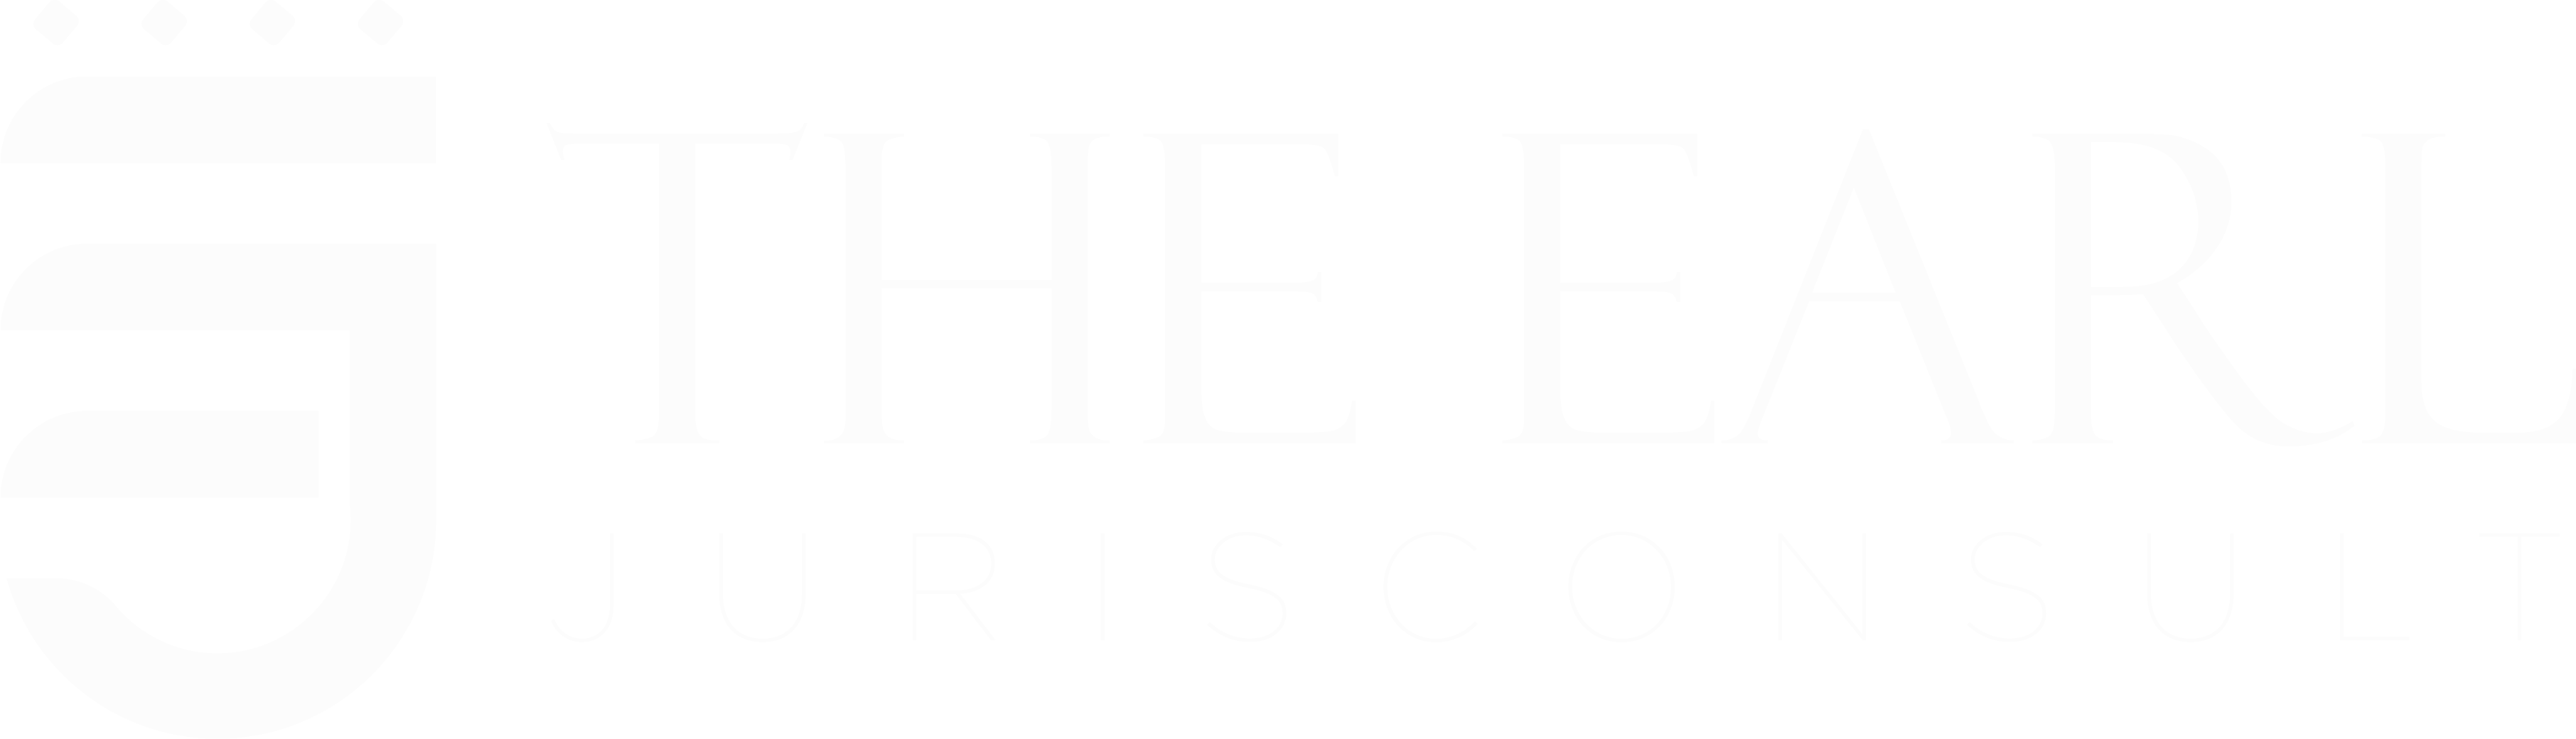 TejConsult-Official-logo@3xblack